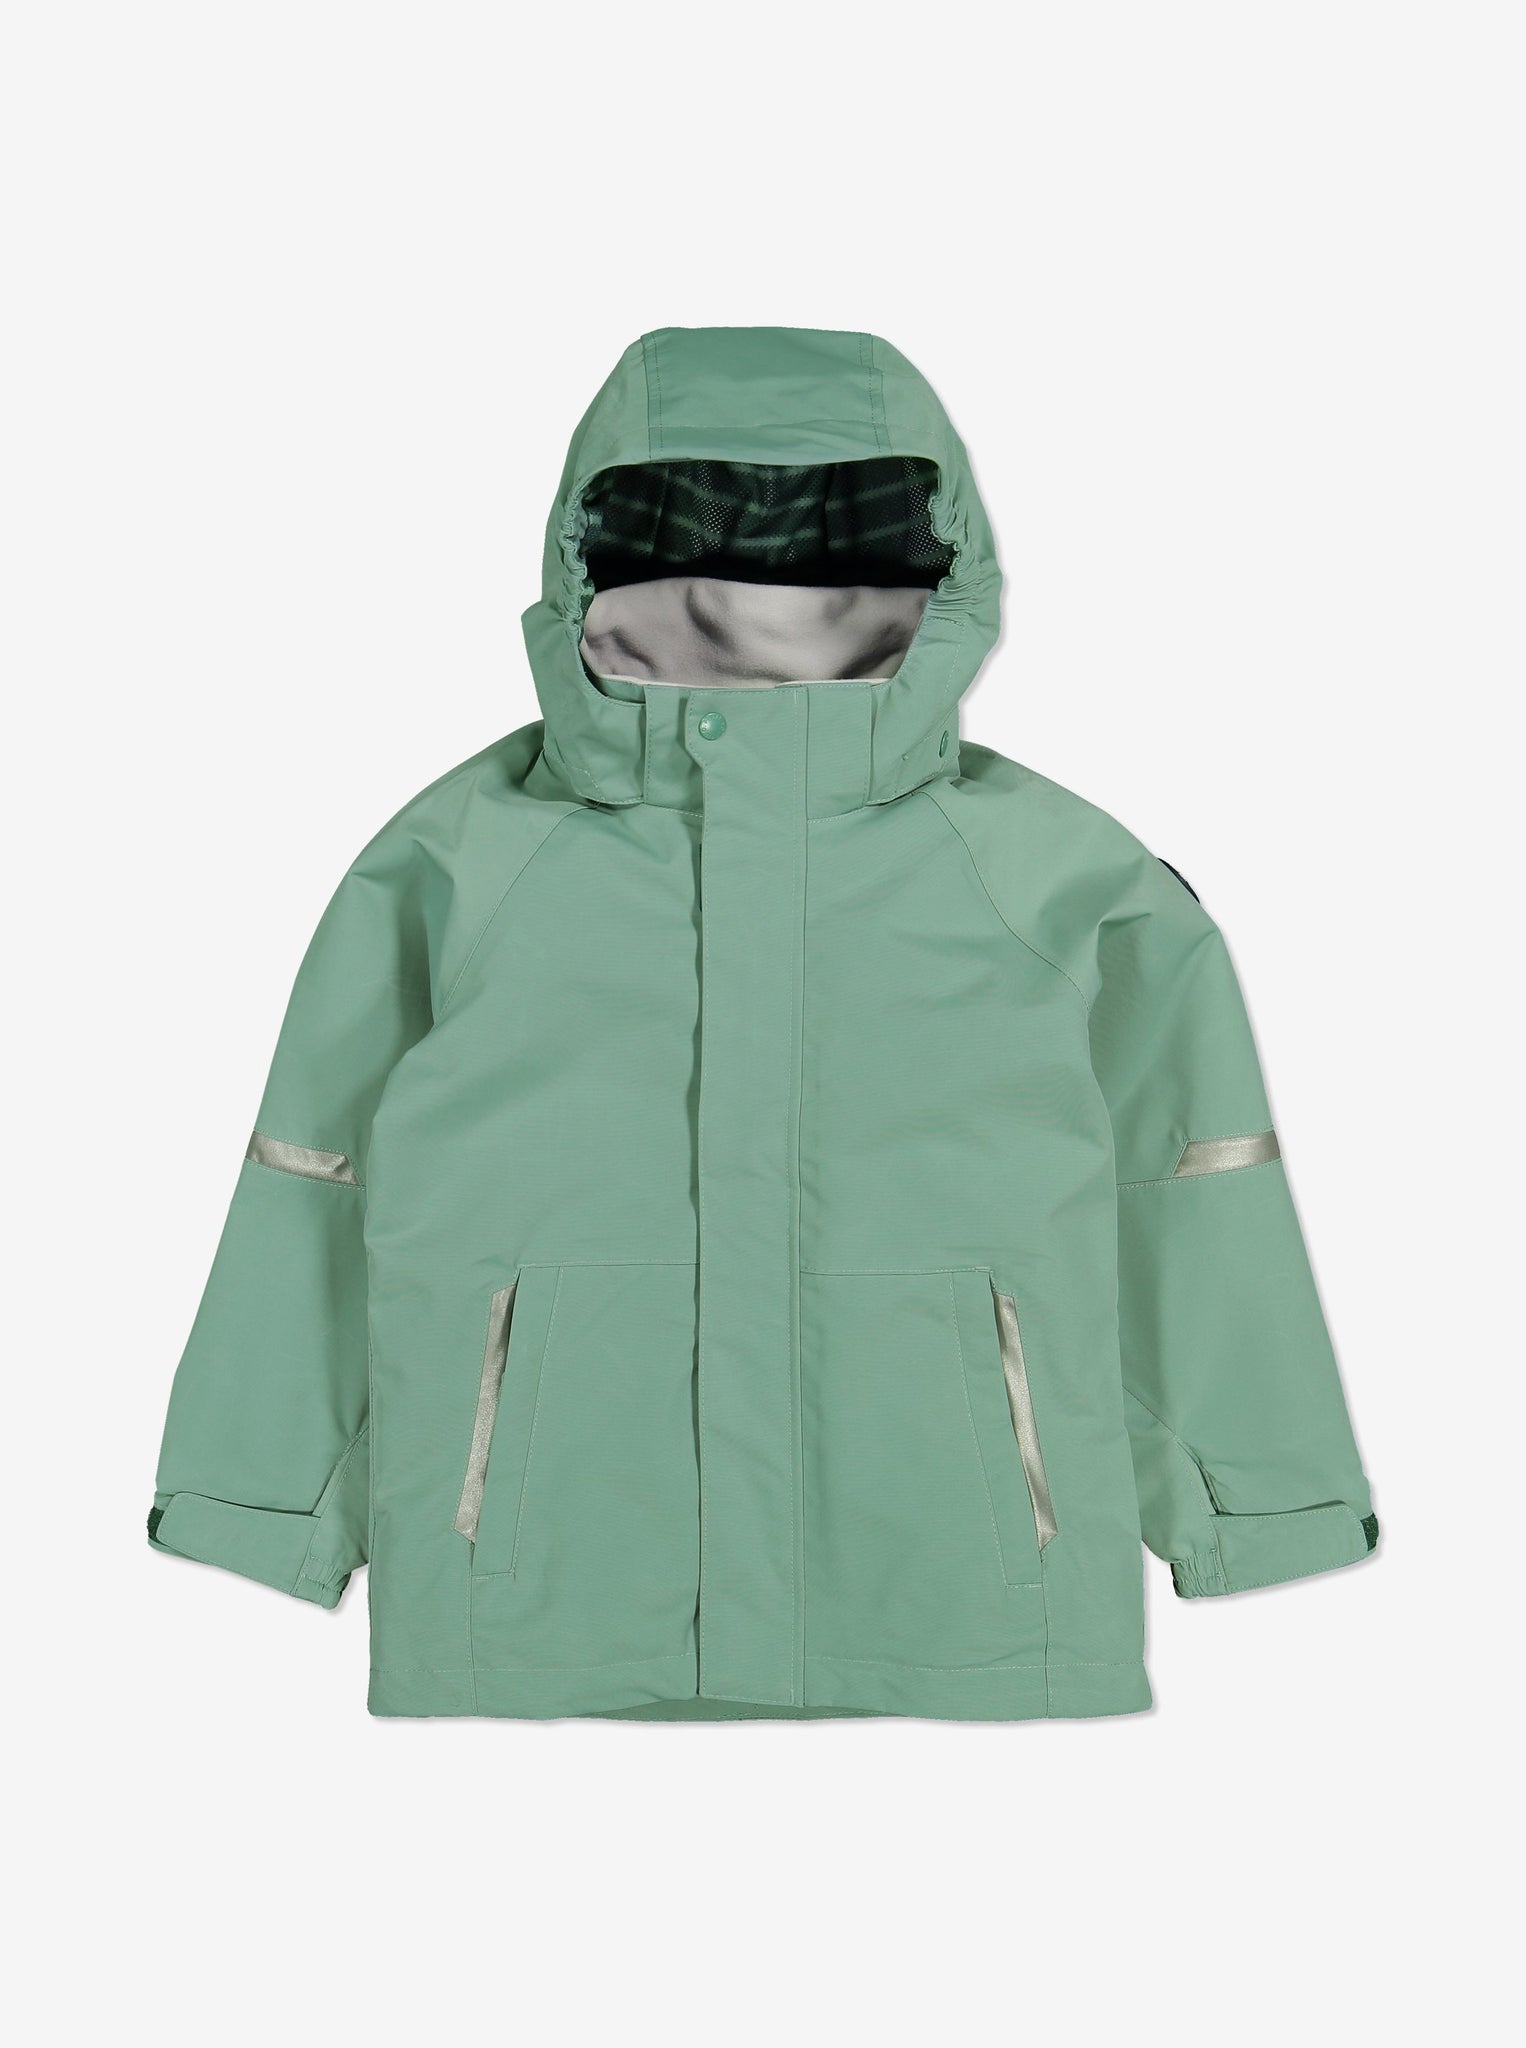 Kids Green Waterproof Shell Jacket | Polarn O. Pyret UK